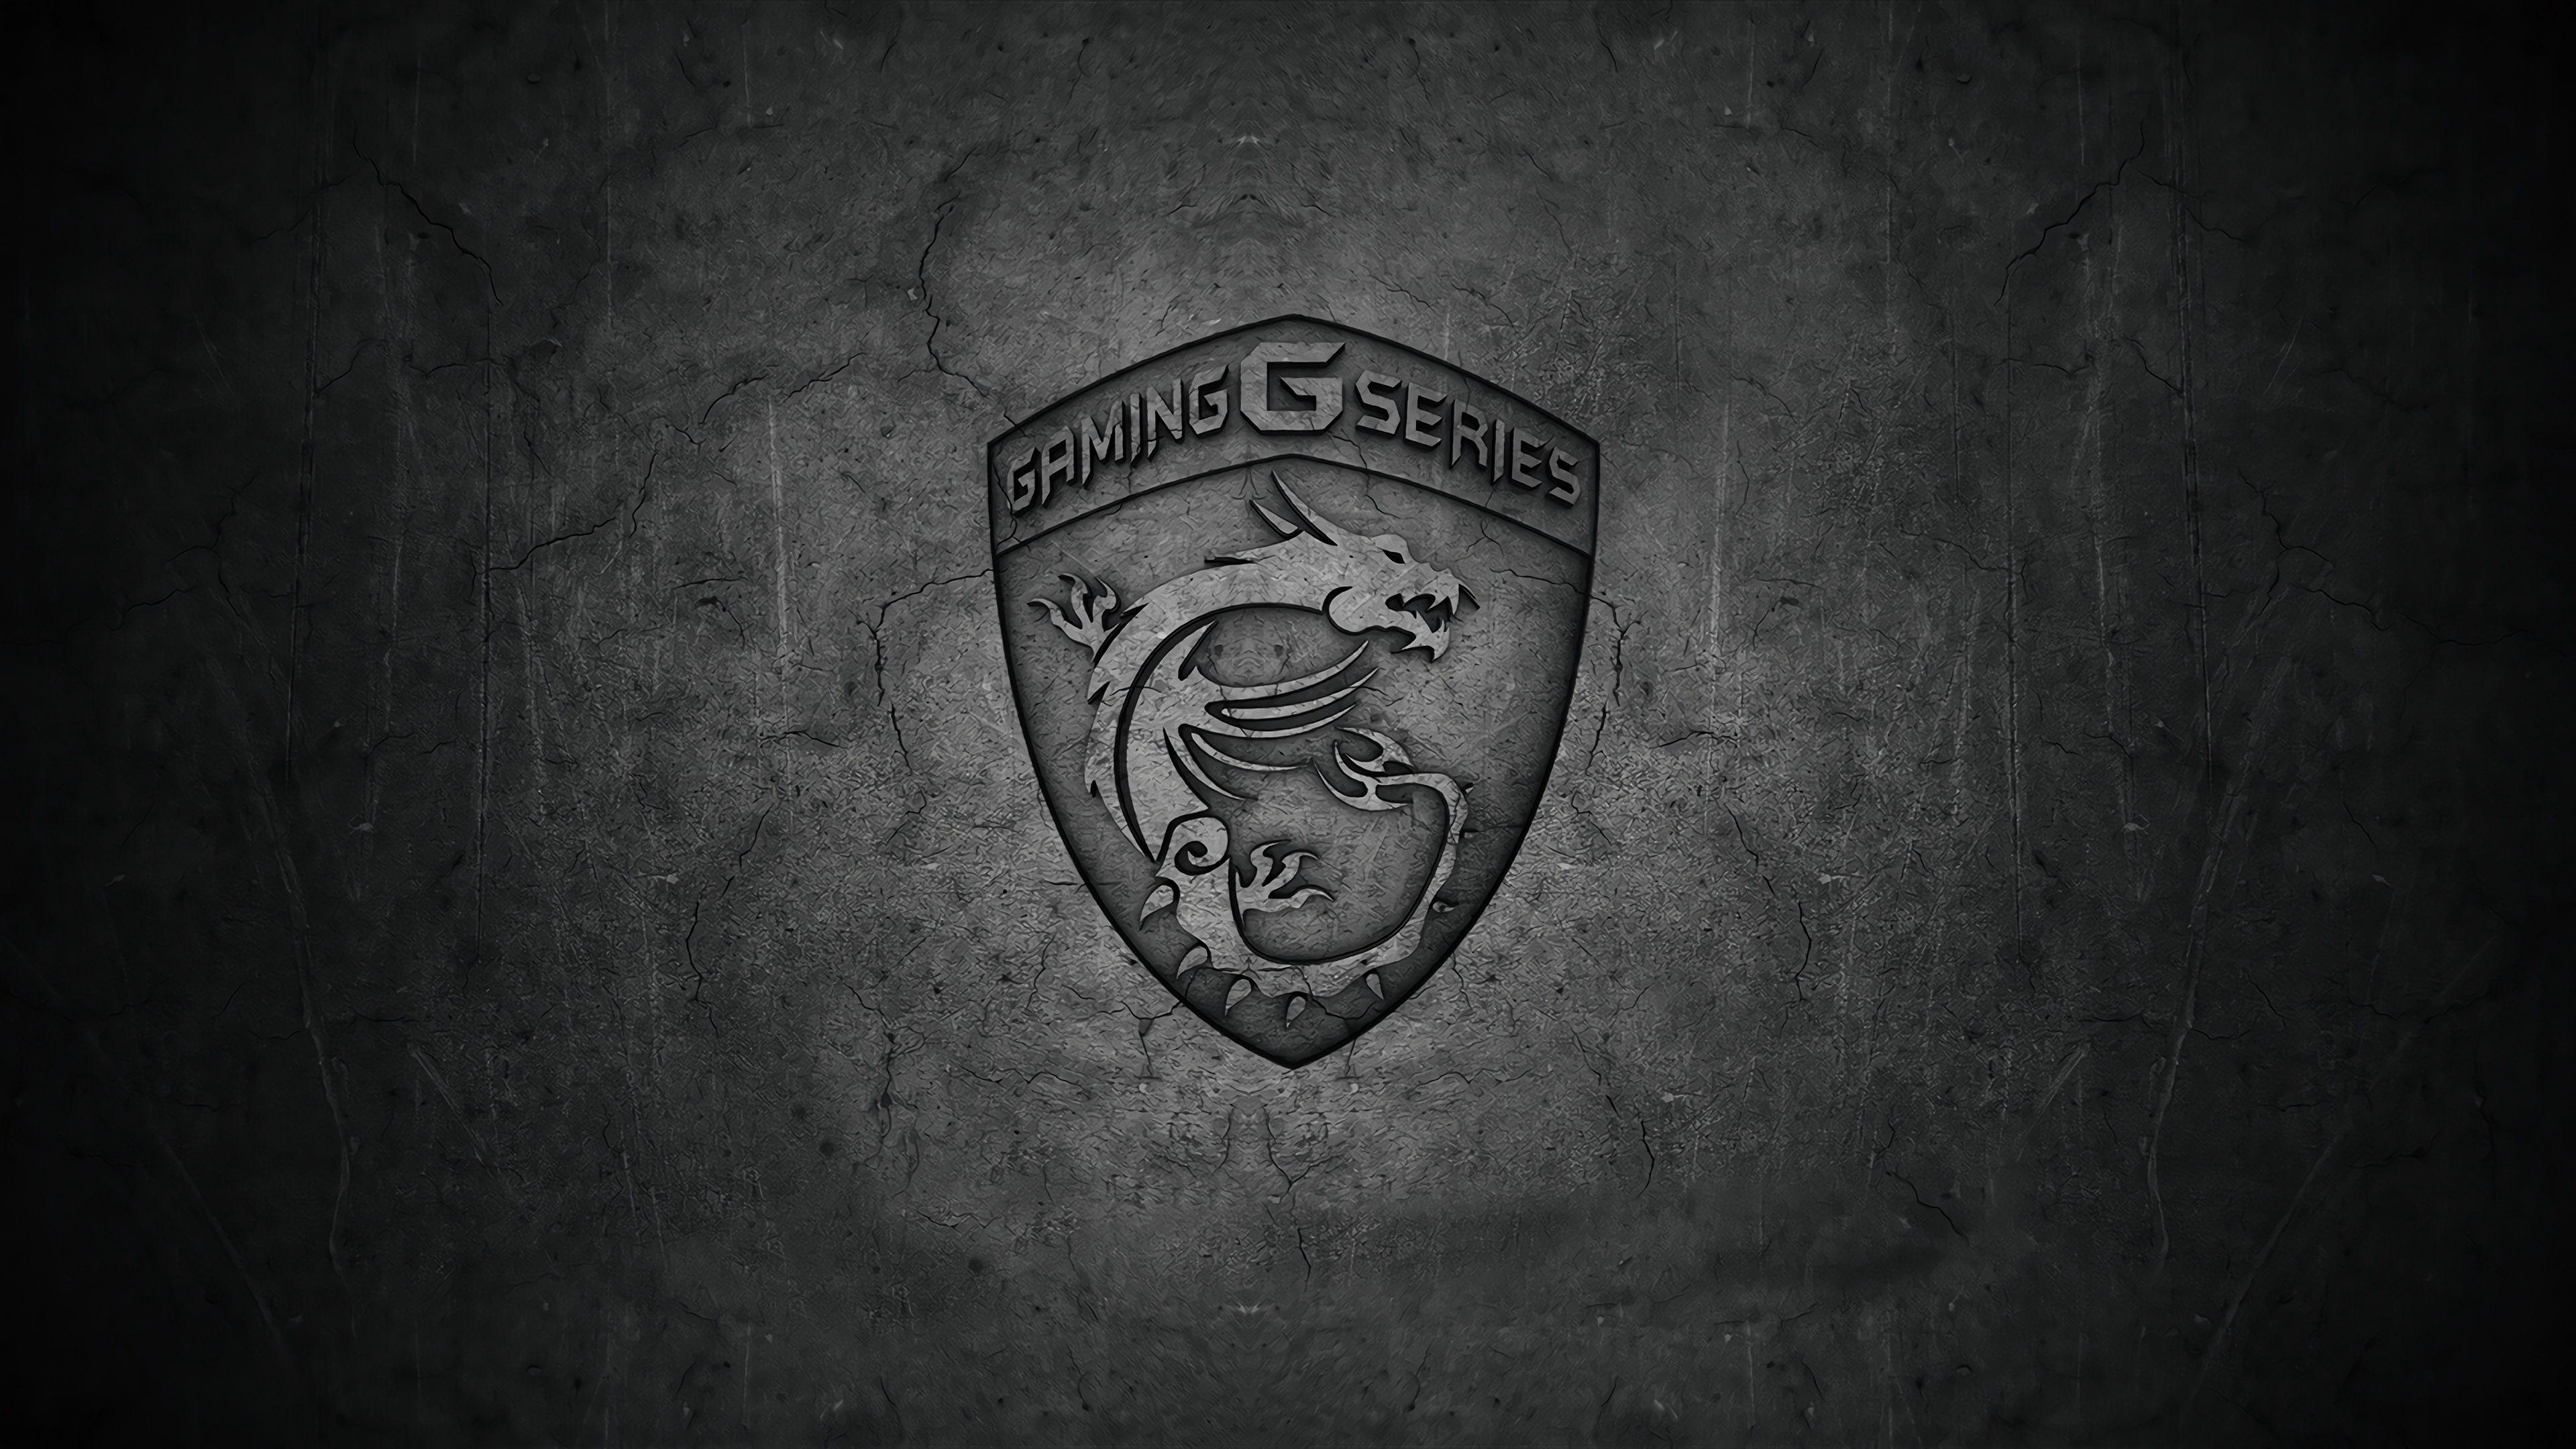 MSI Gaming G Series Dragon Logo 4k wallpaper. Duvar kağıtları